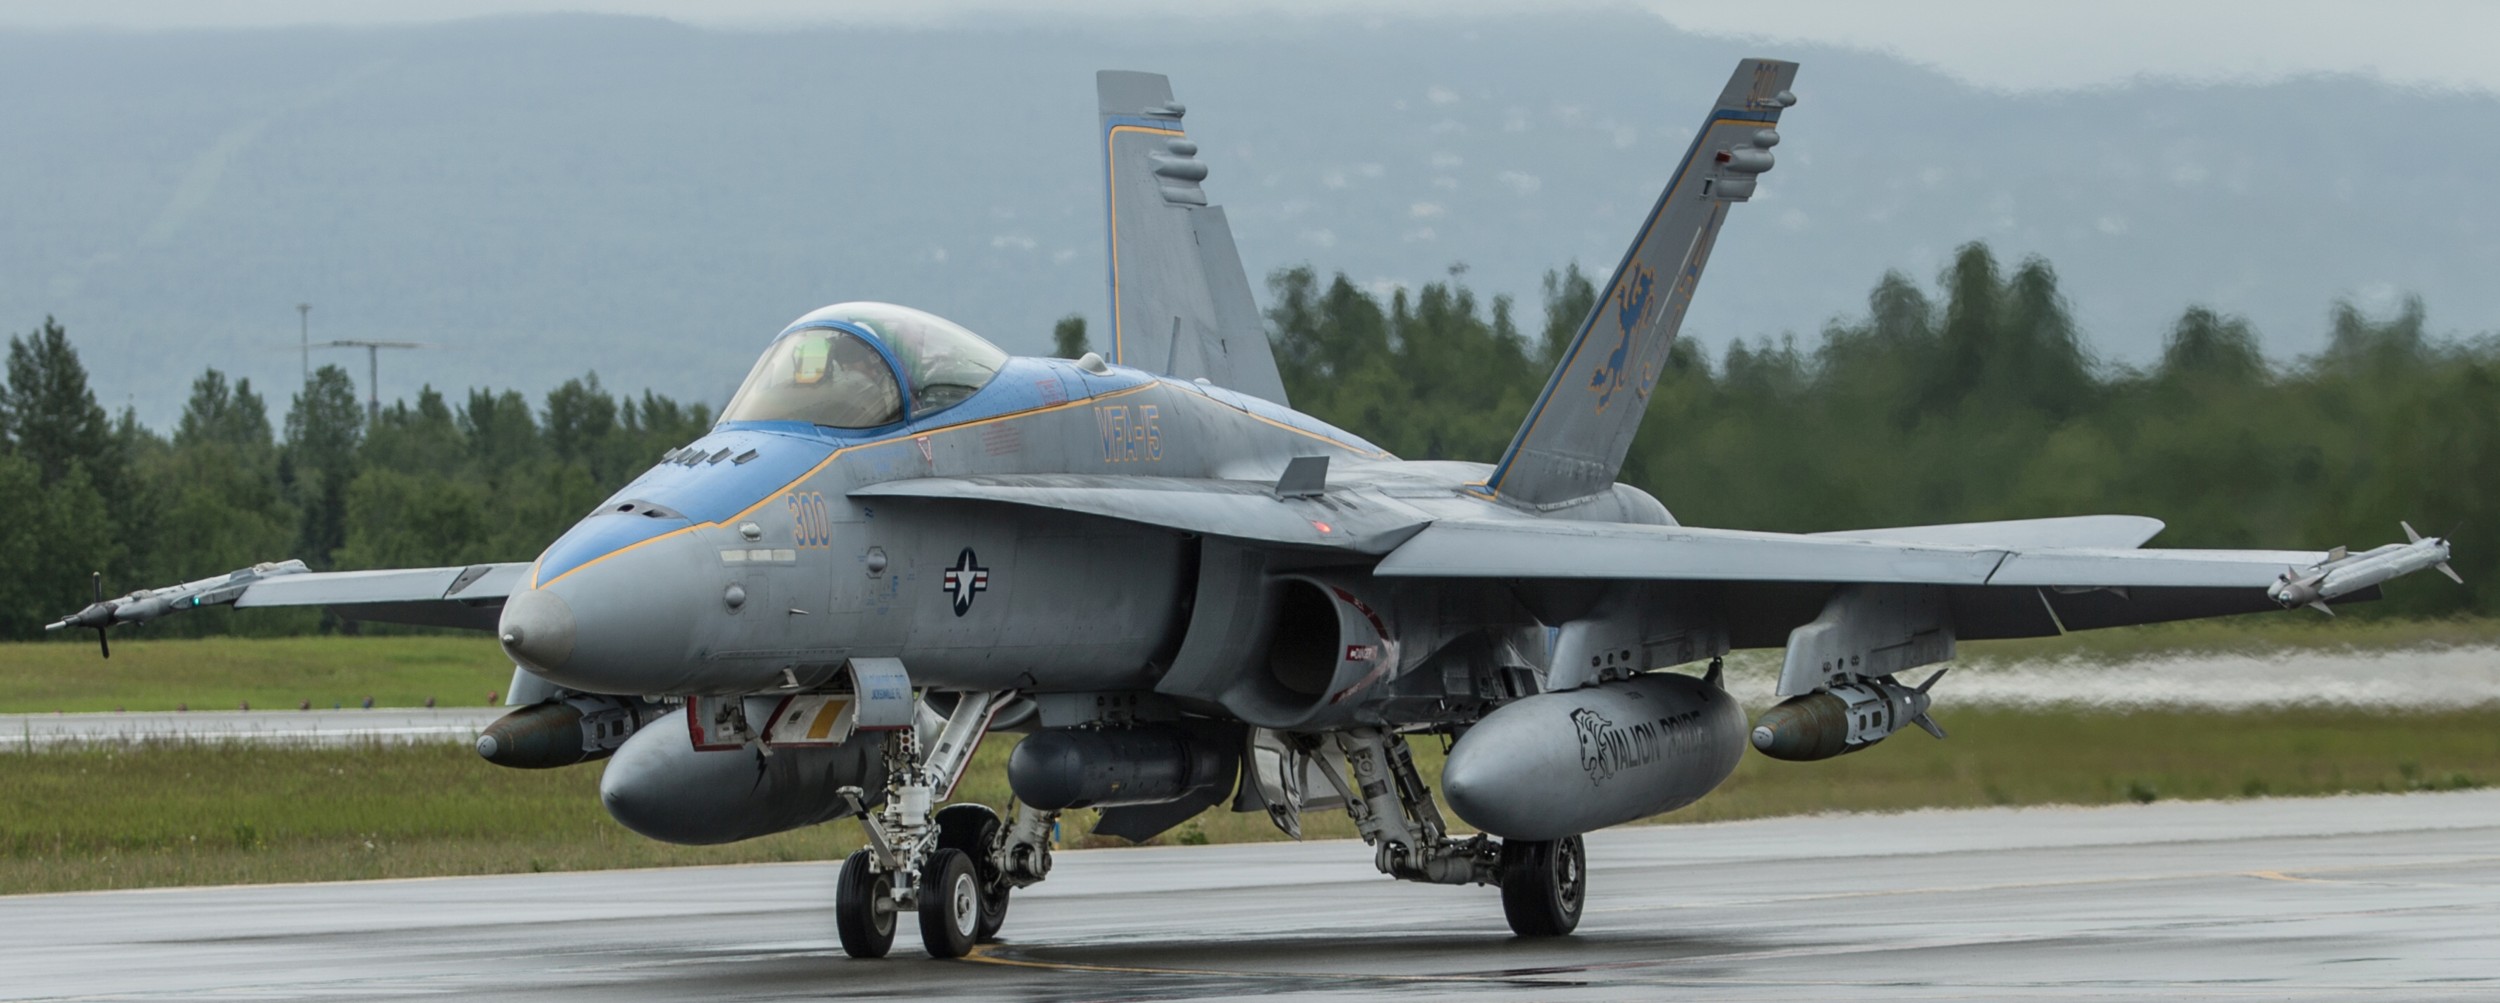 vfa-15 valions strike fighter squadron f/a-18c hornet joint base elmendorf richardson alaska red flag 41